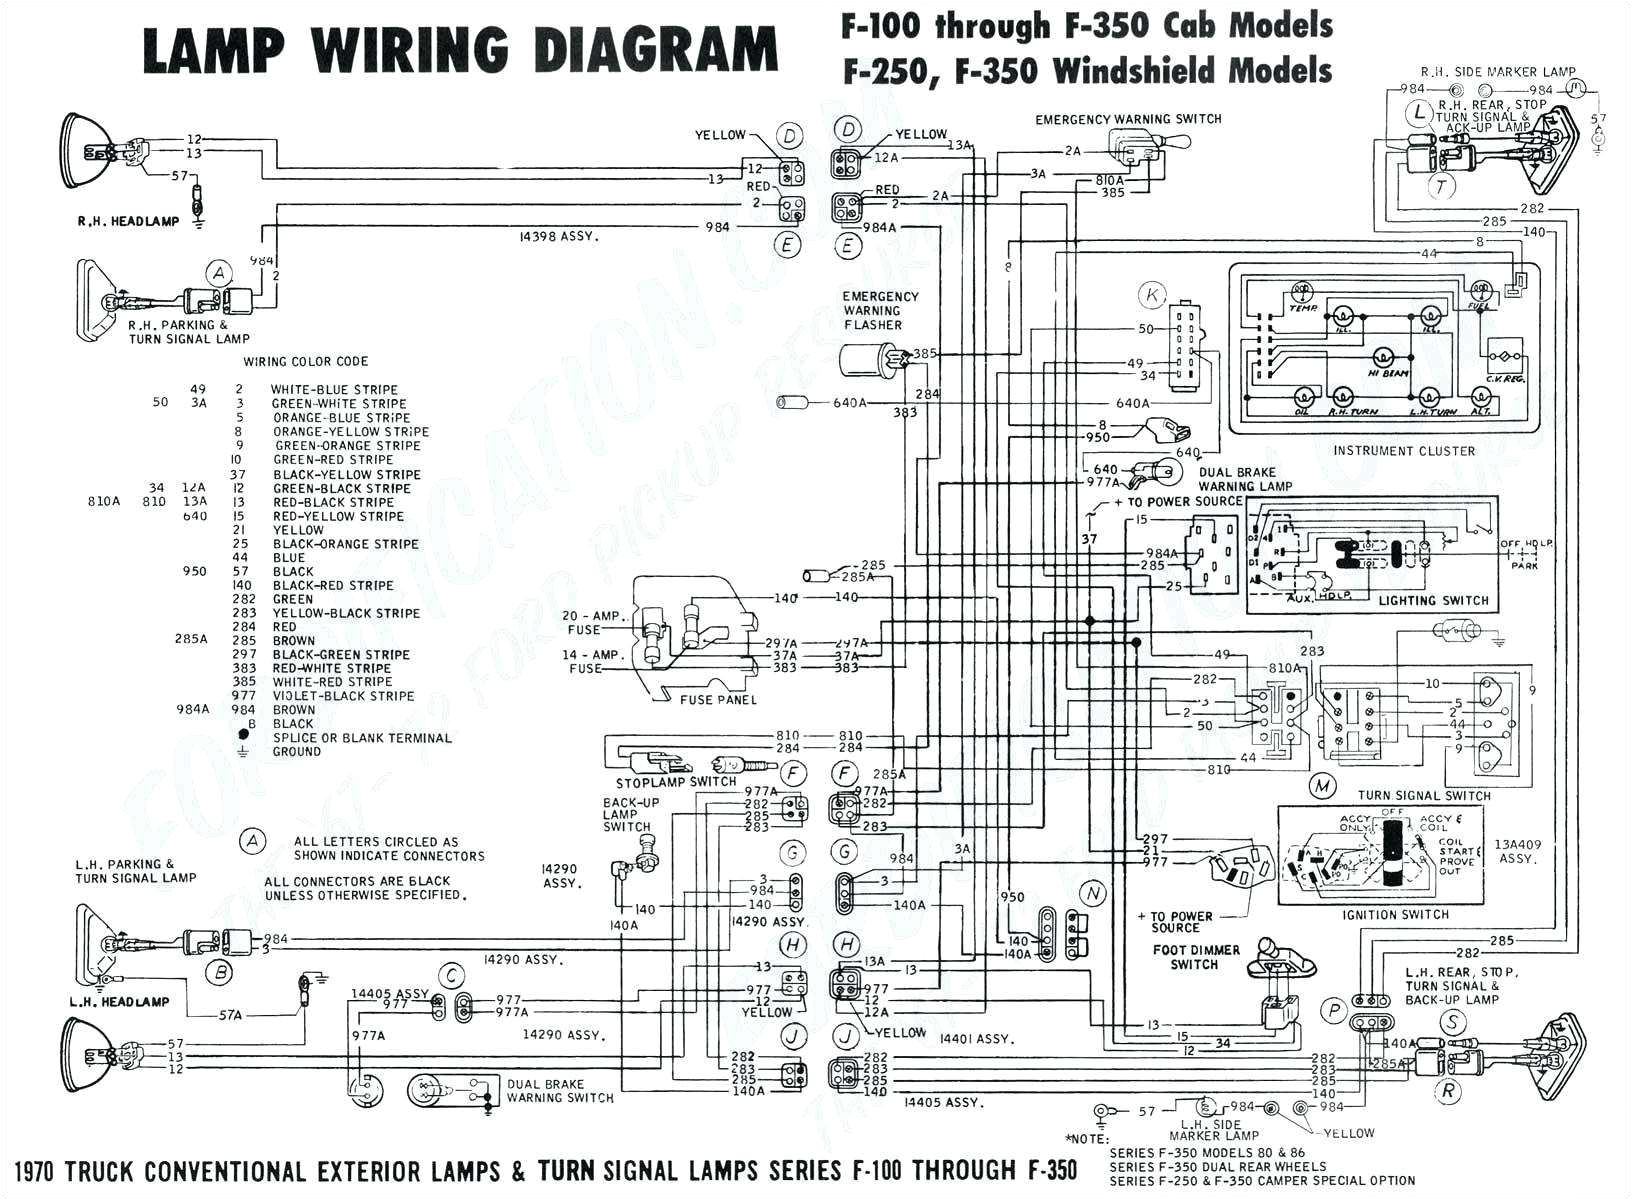 02 dodge 4 7 engine diagram blog wiring diagram dodge durango 4 7 engine diagram